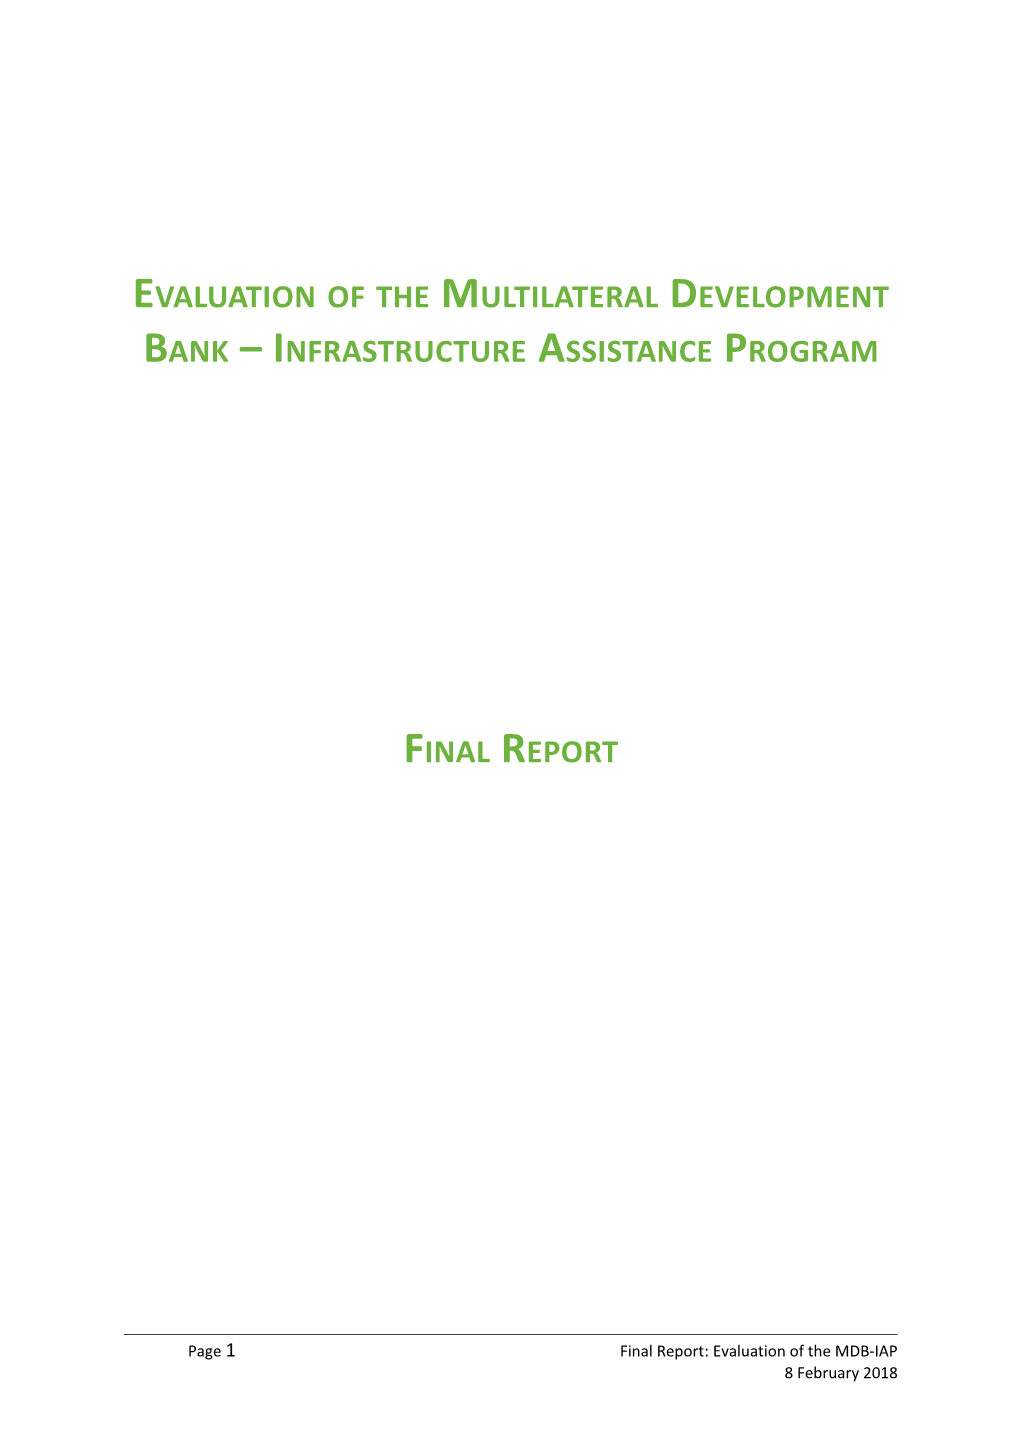 Evaluation of the Multilateral Development Bank Infrastructure Assistance Program